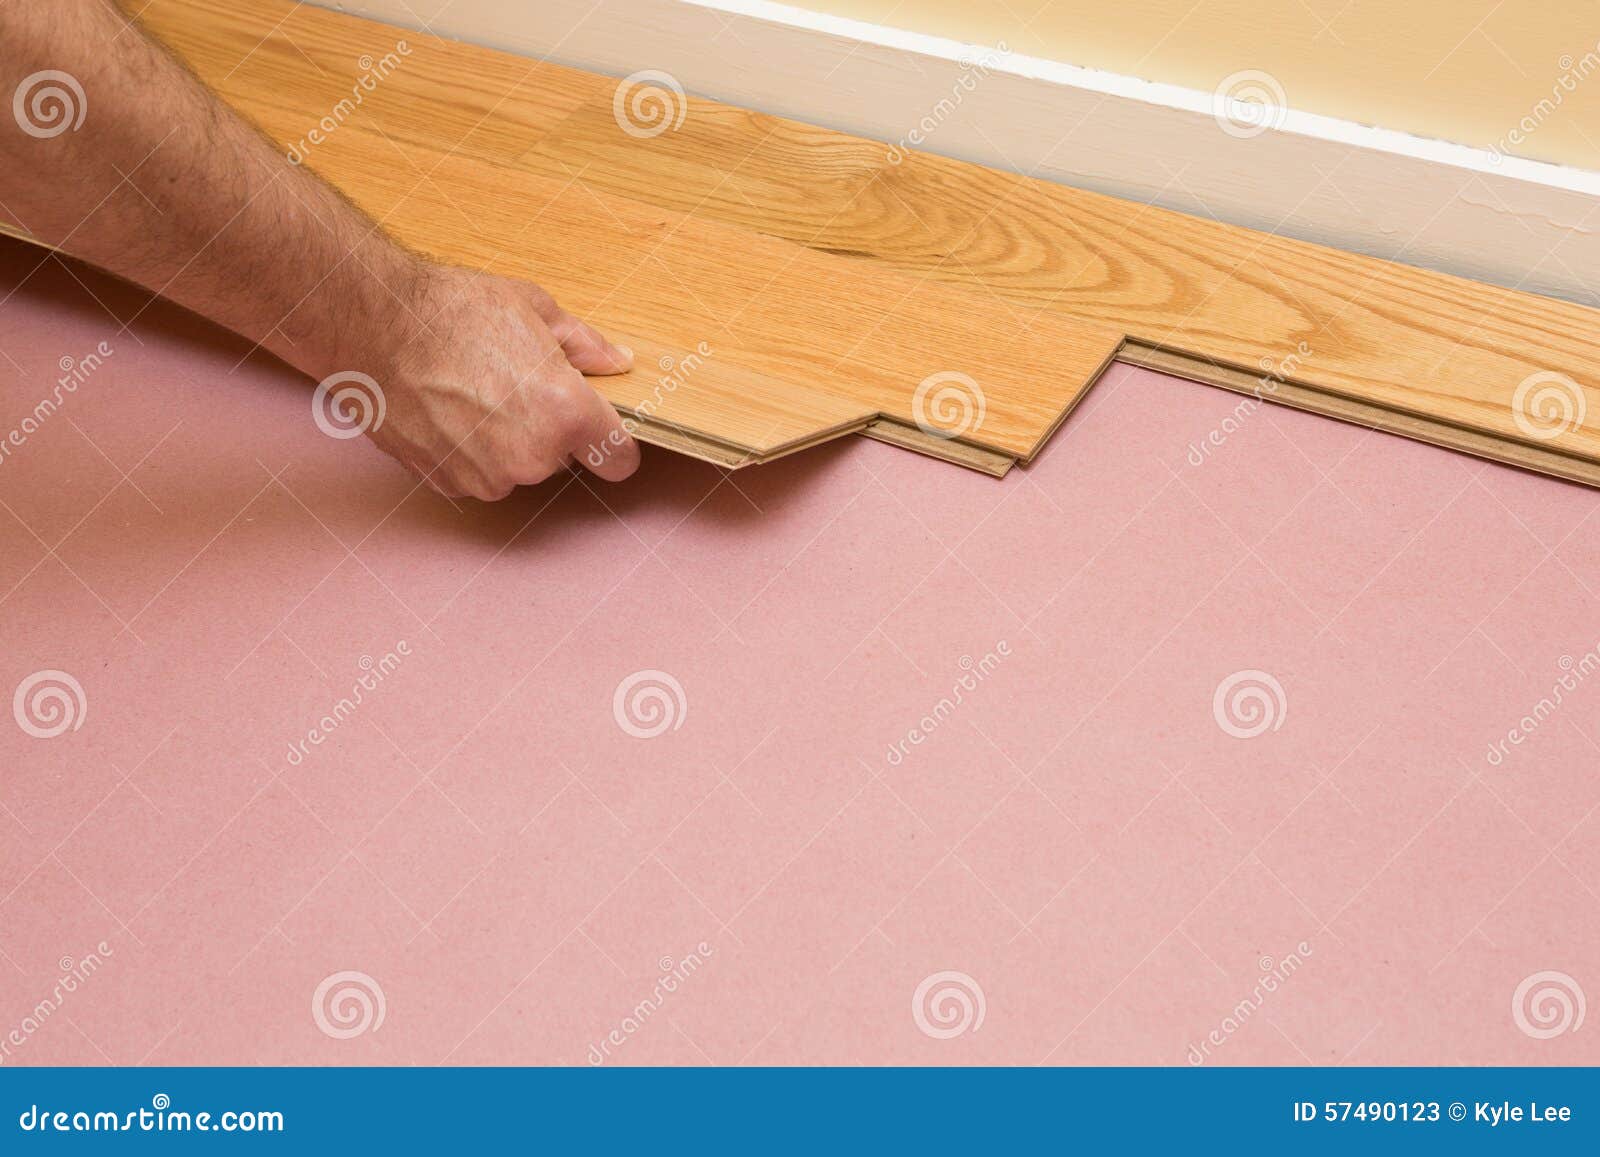 Installing Engineered Hardwood Floor Stock Image Image Of